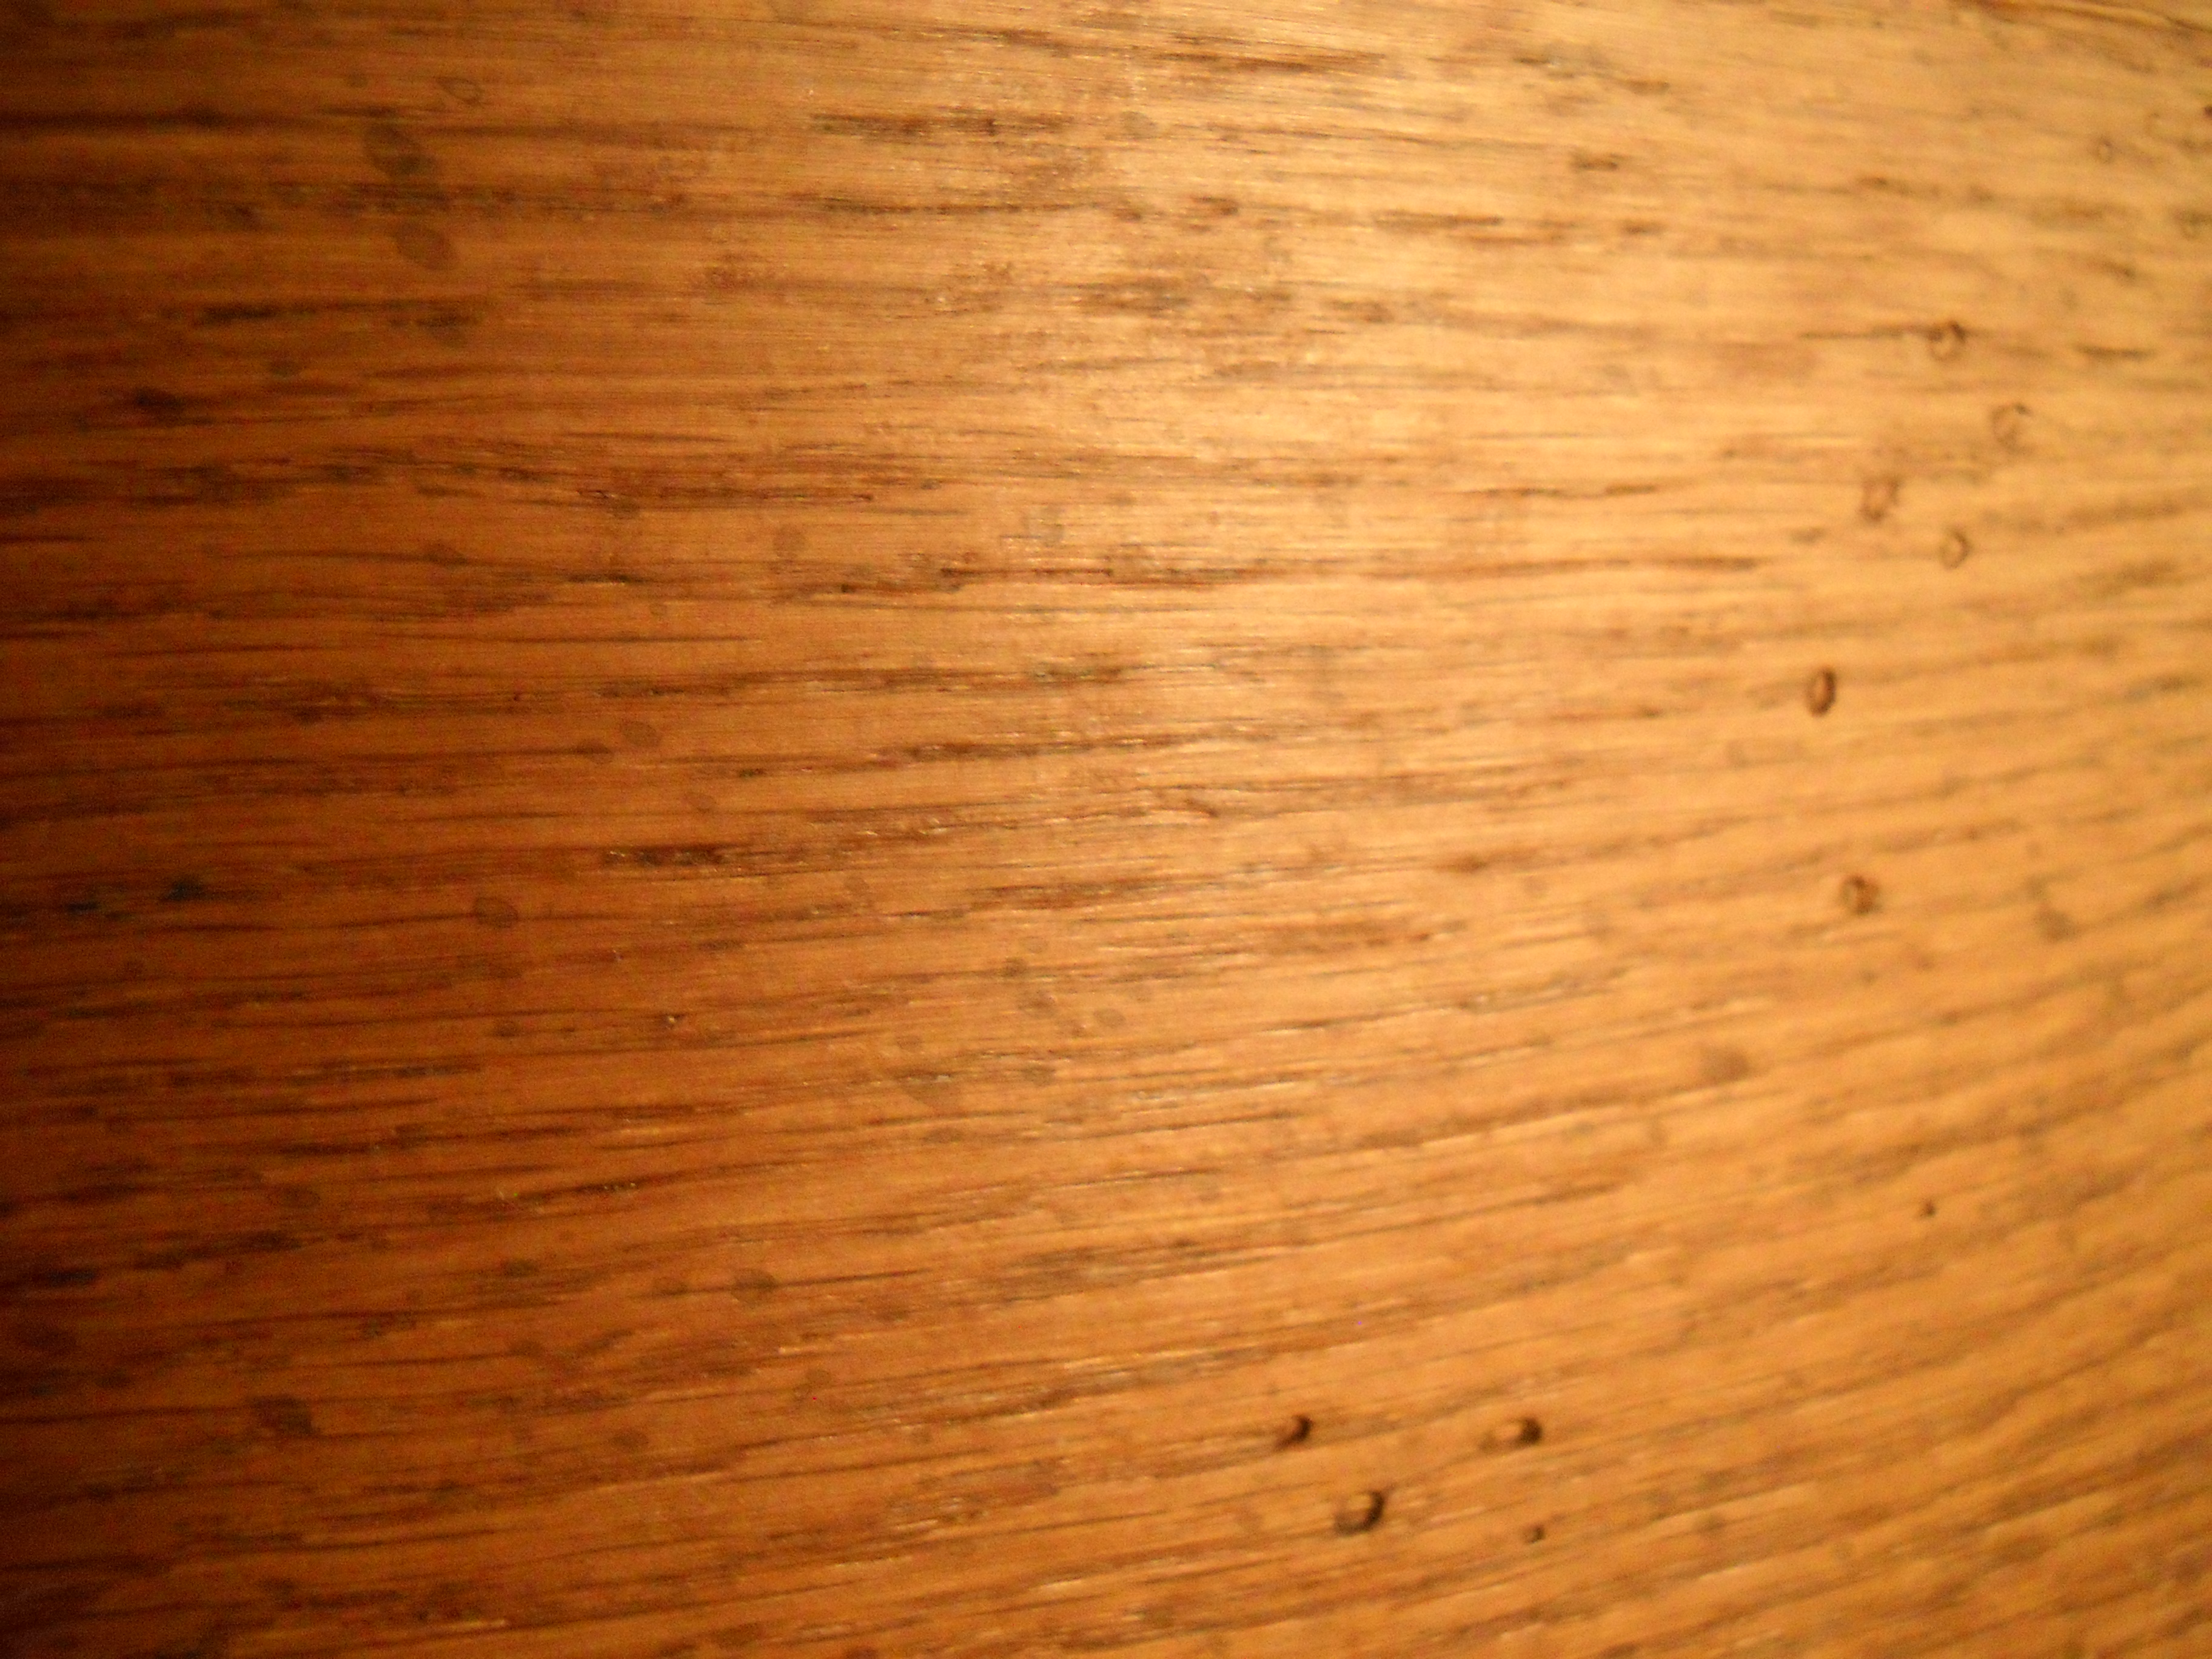 Traditional Self Adhesive Wood Grain Wall Paper For Wood Grain